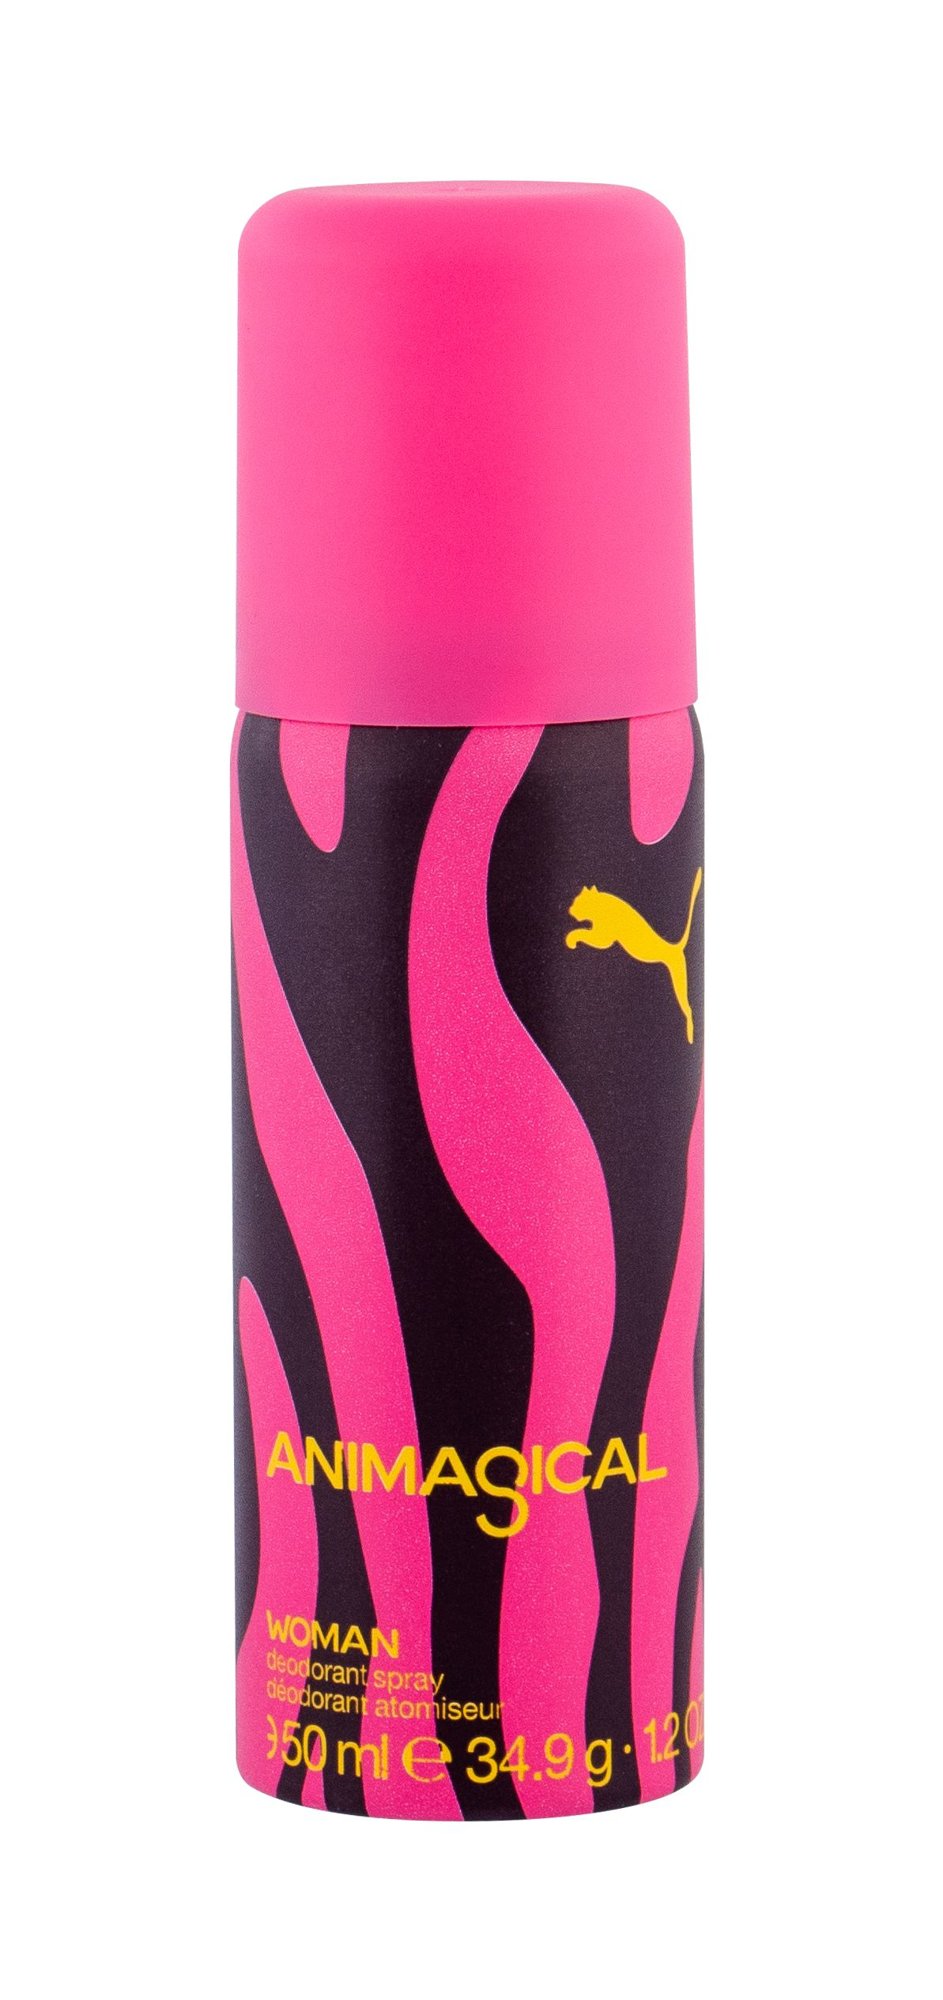 Puma Animagical Woman, Deodorant 50ml